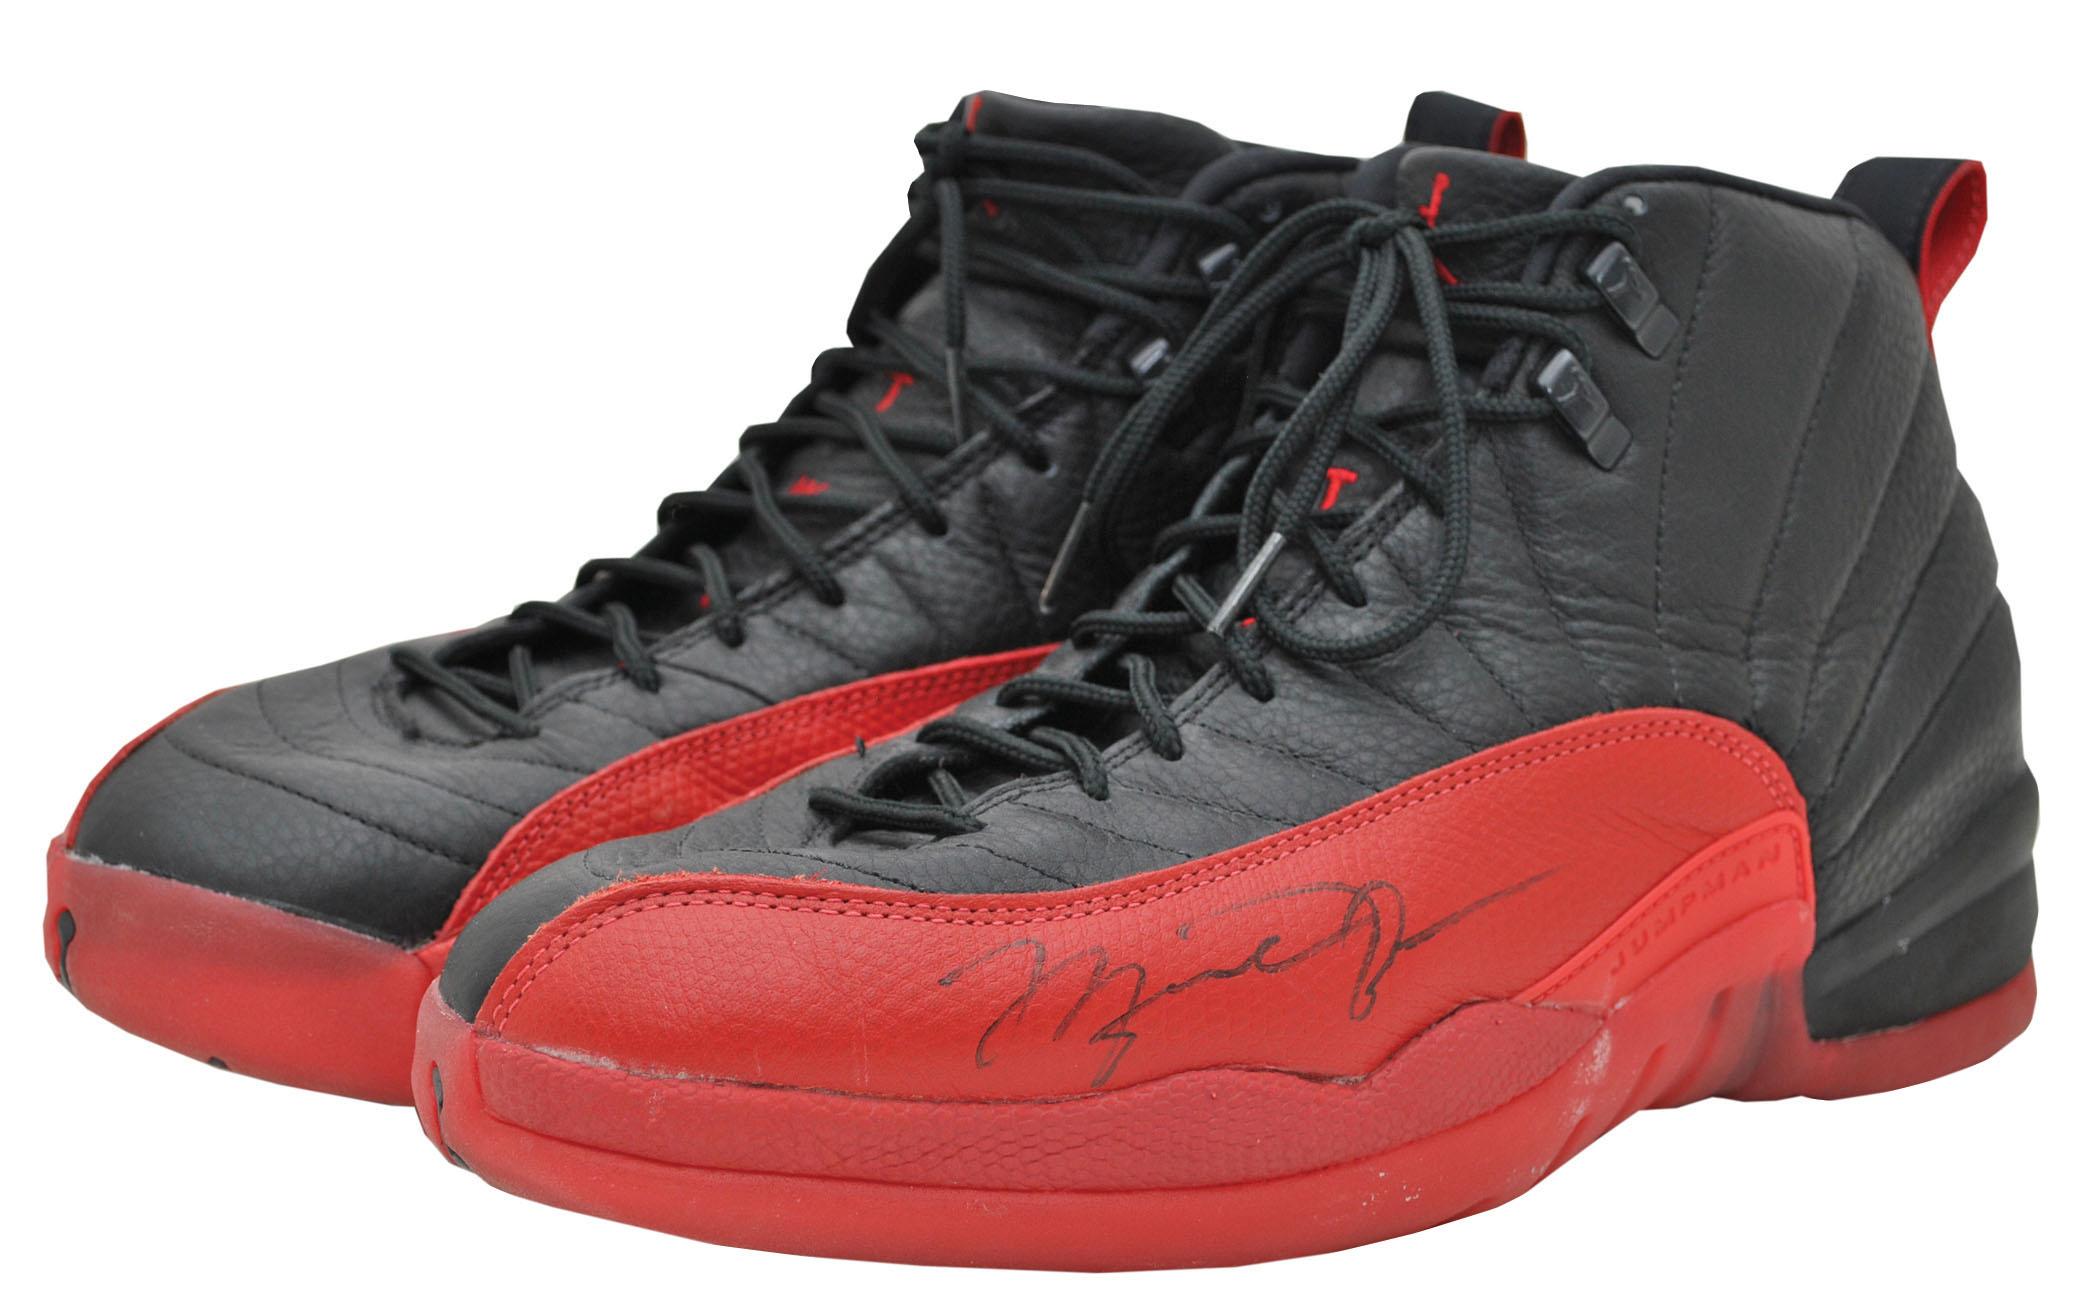 Cifra record per le scarpe di Michael Jordan - Photogallery - Rai News